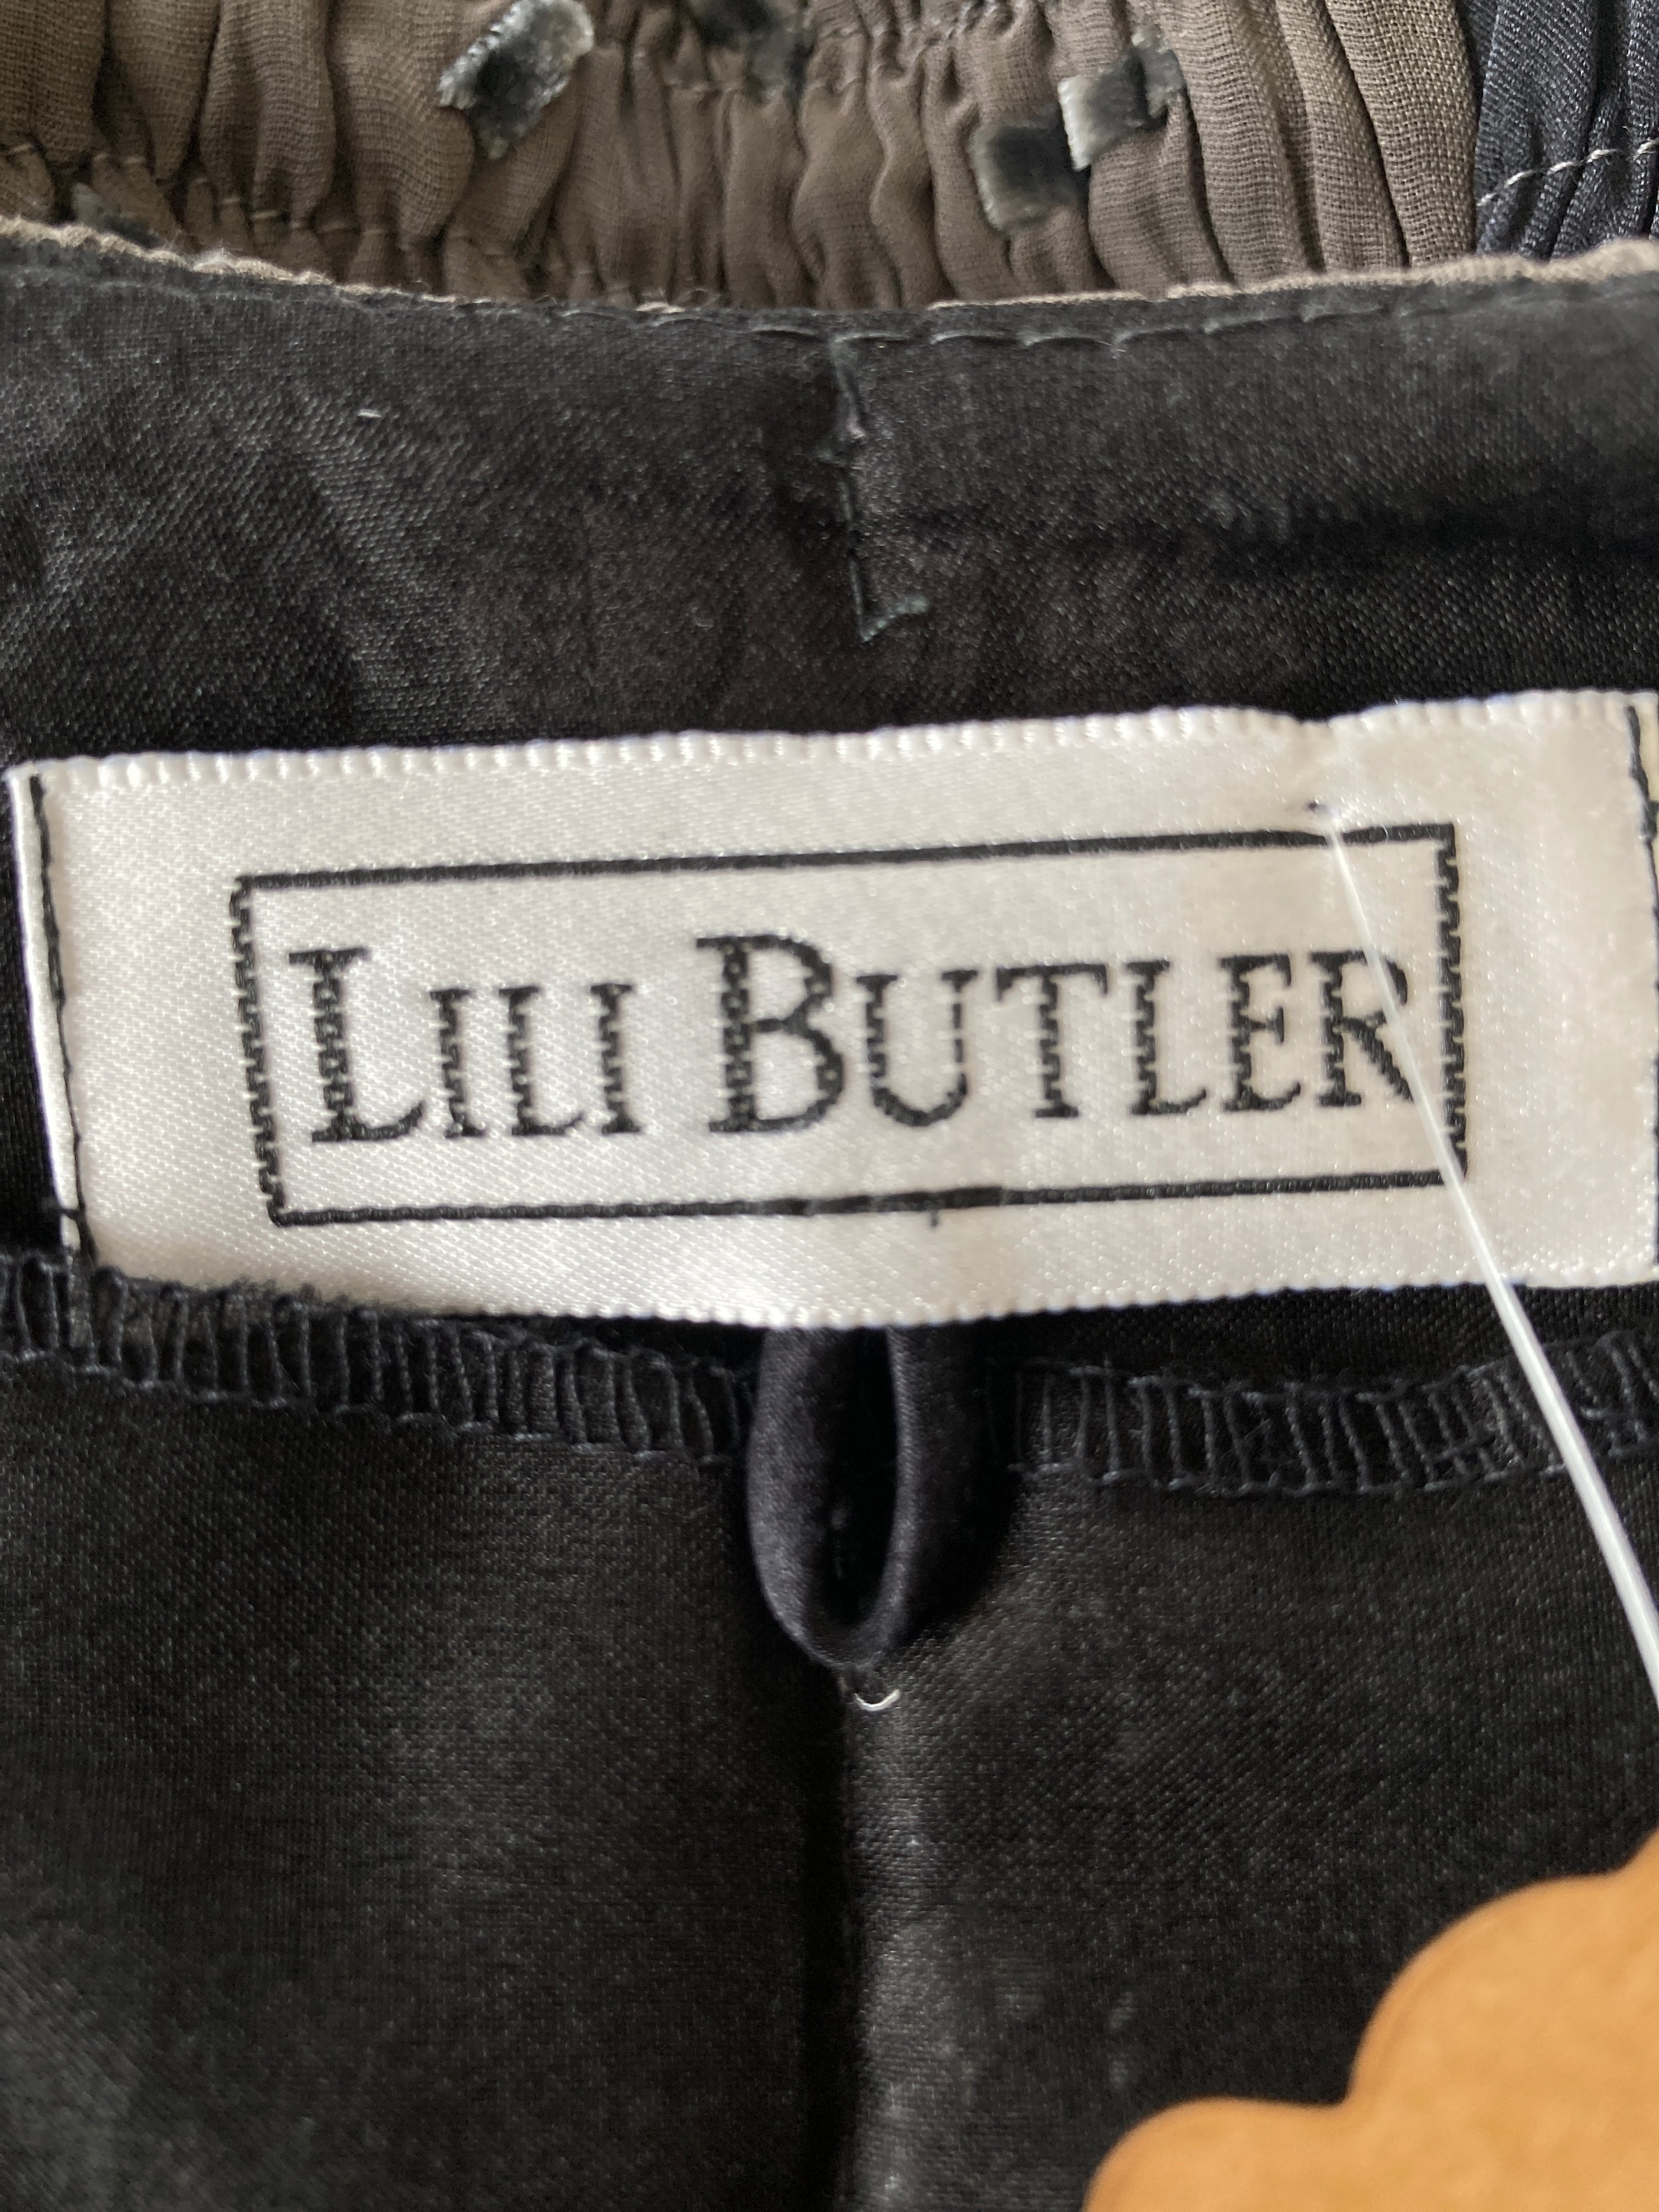 Lili Butler Grey Pattern Lightweight Silk Topper Coat, S/M